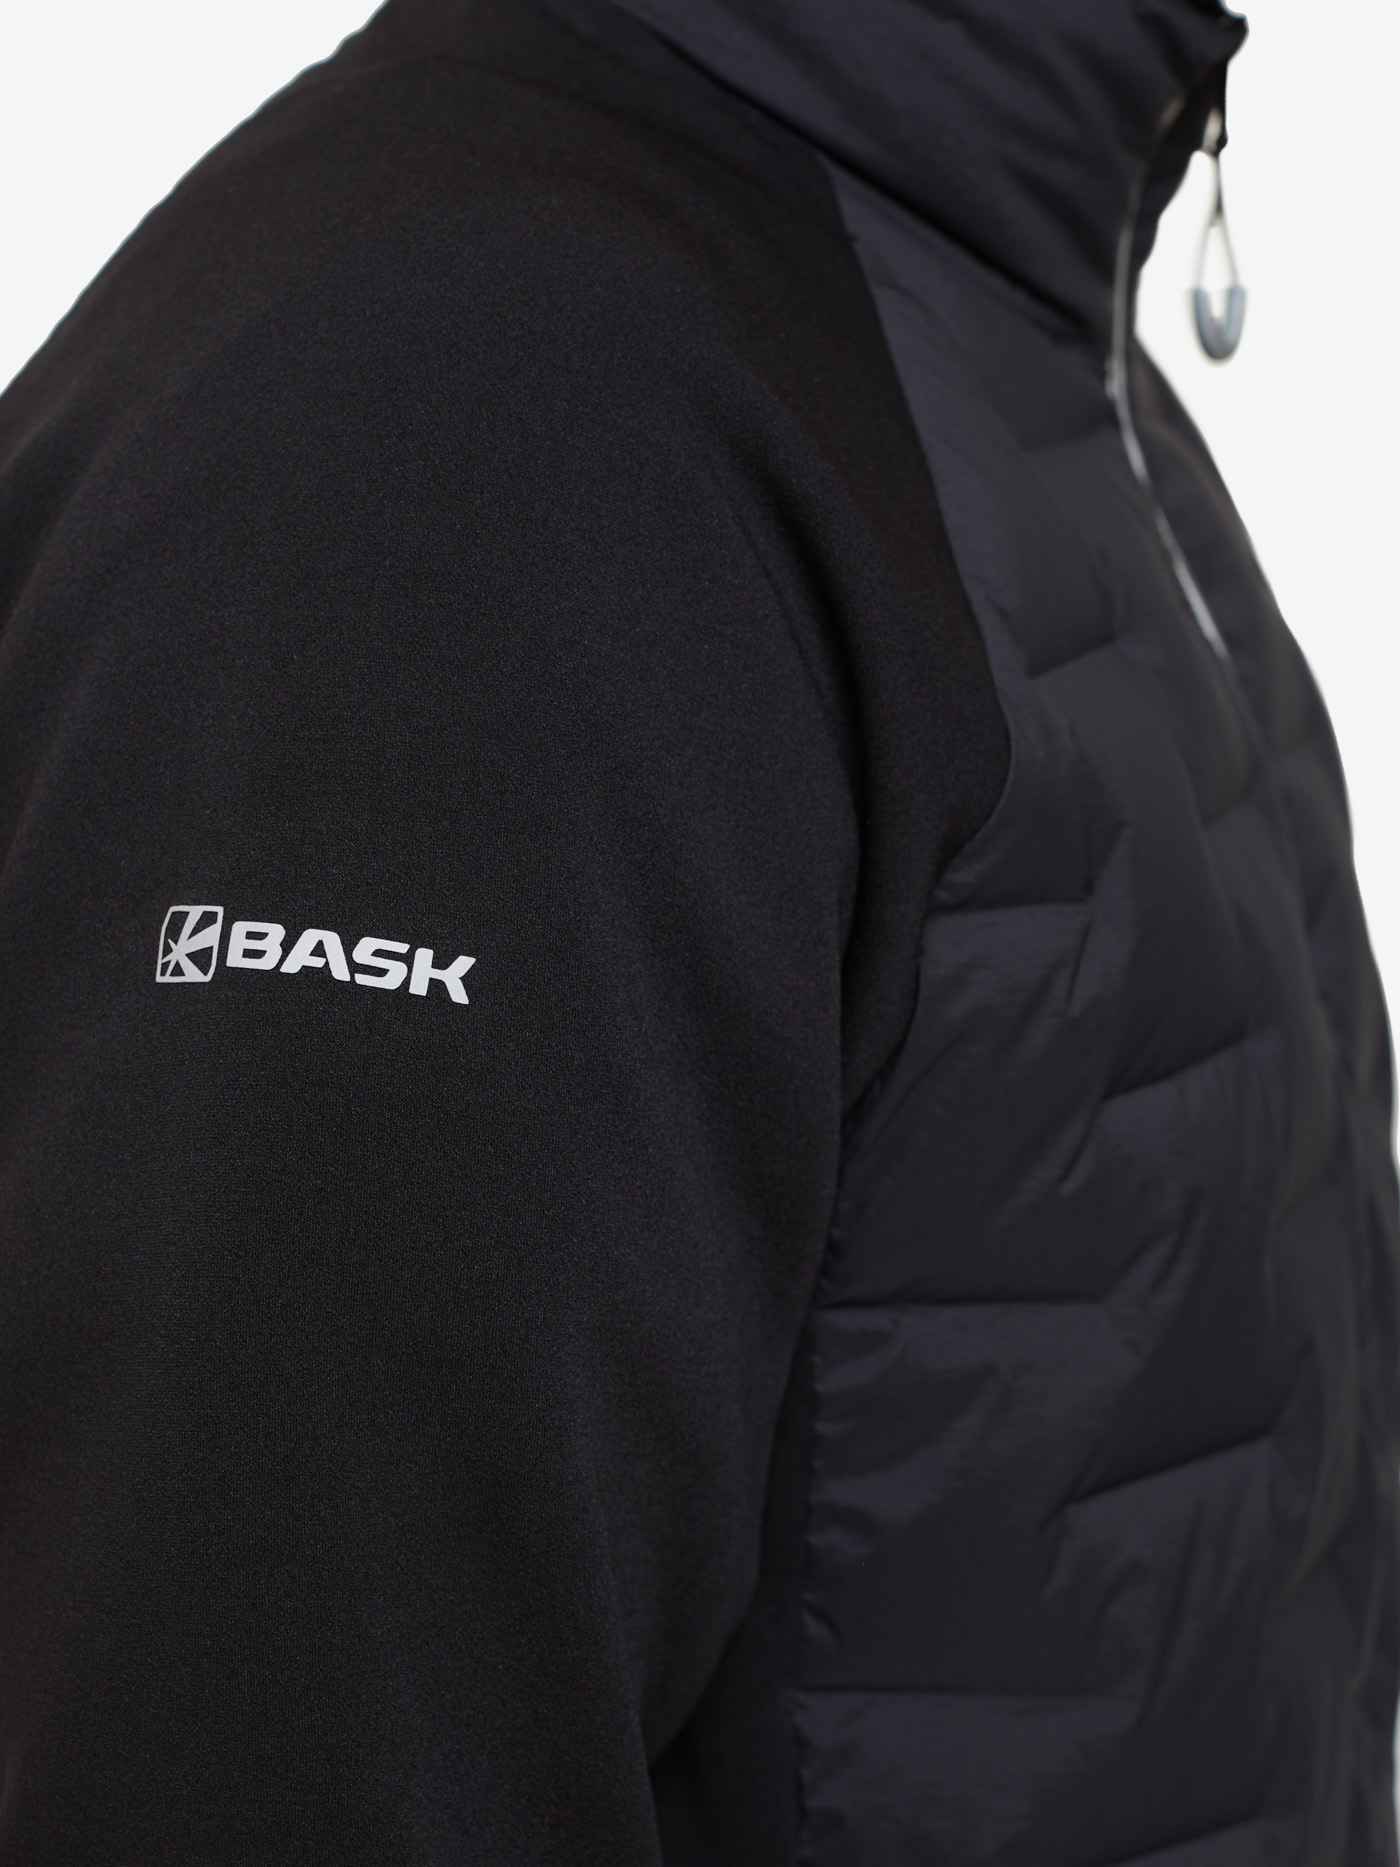 Куртка BASK, размер 50, цвет черный 19031-9009-050 Chamonix light hybrid v2 - фото 6